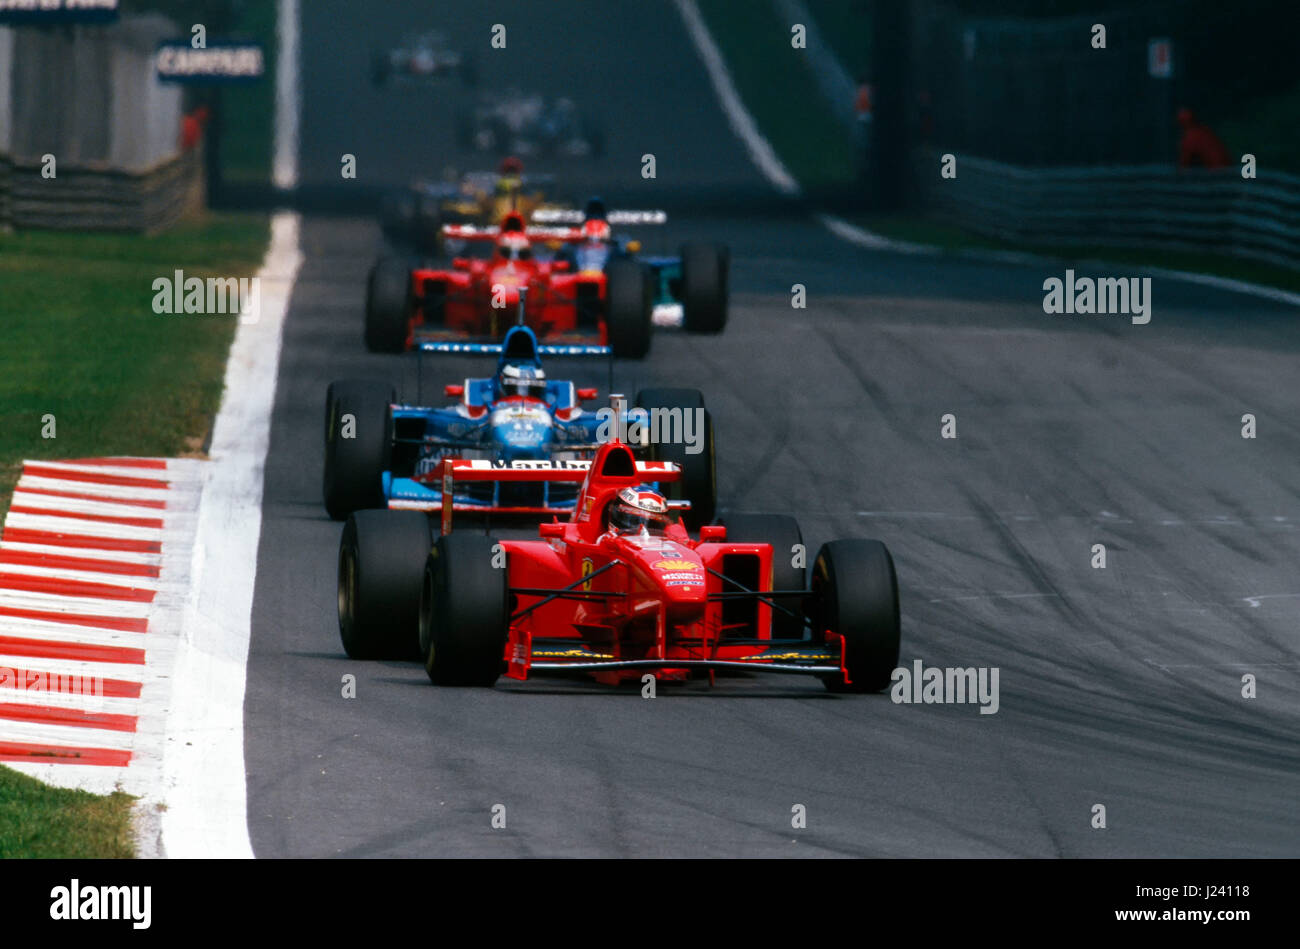 F1, Ferrari, Michael Schumacher, GP Italia, Monza, 1997 Foto de stock